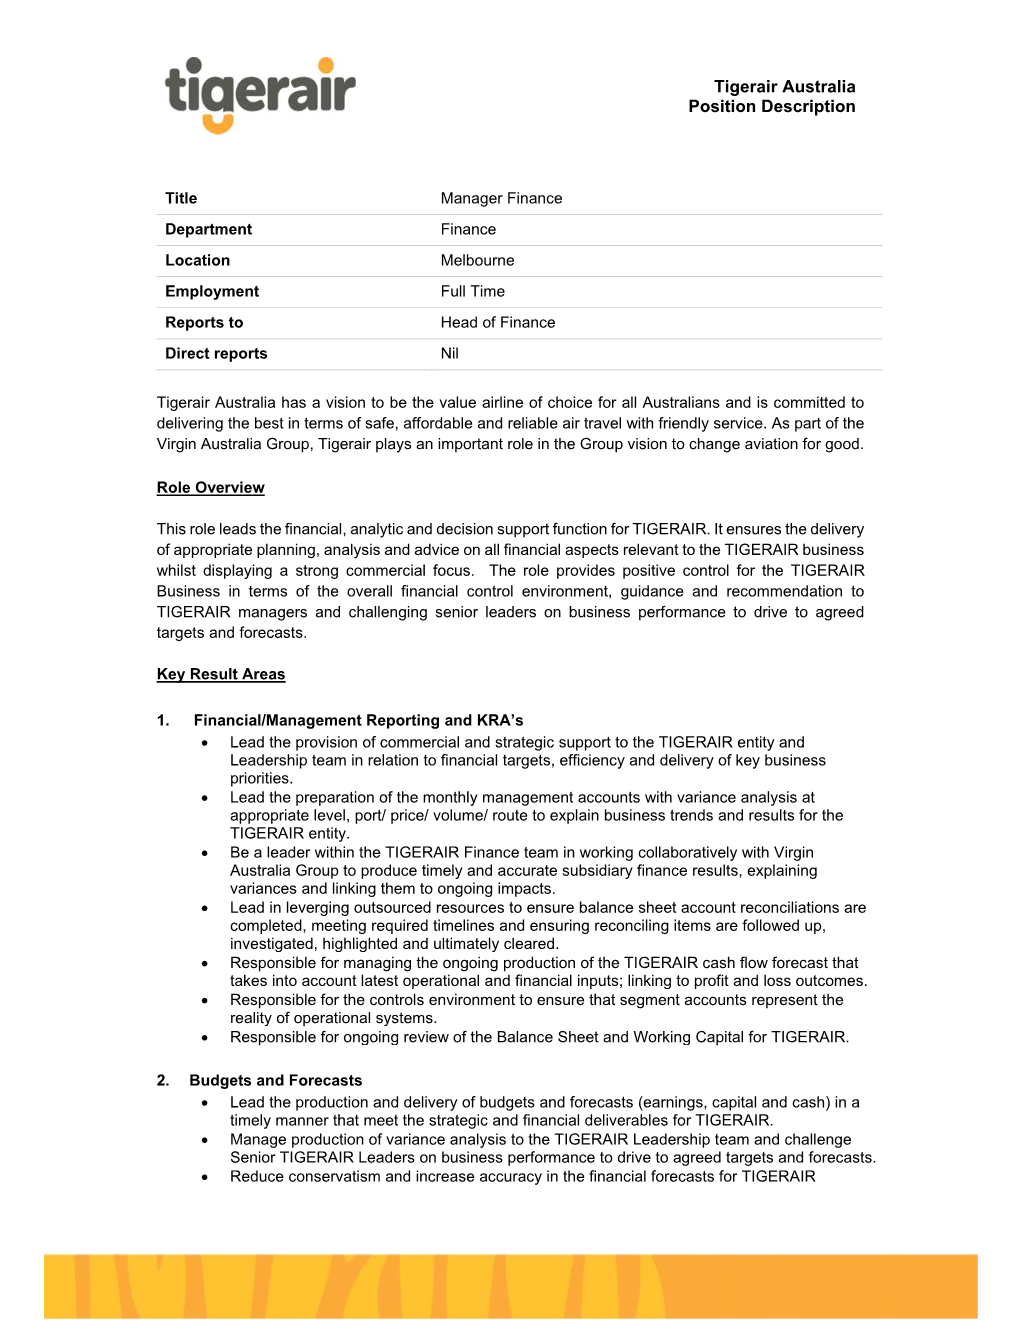 Tigerair Australia Position Description